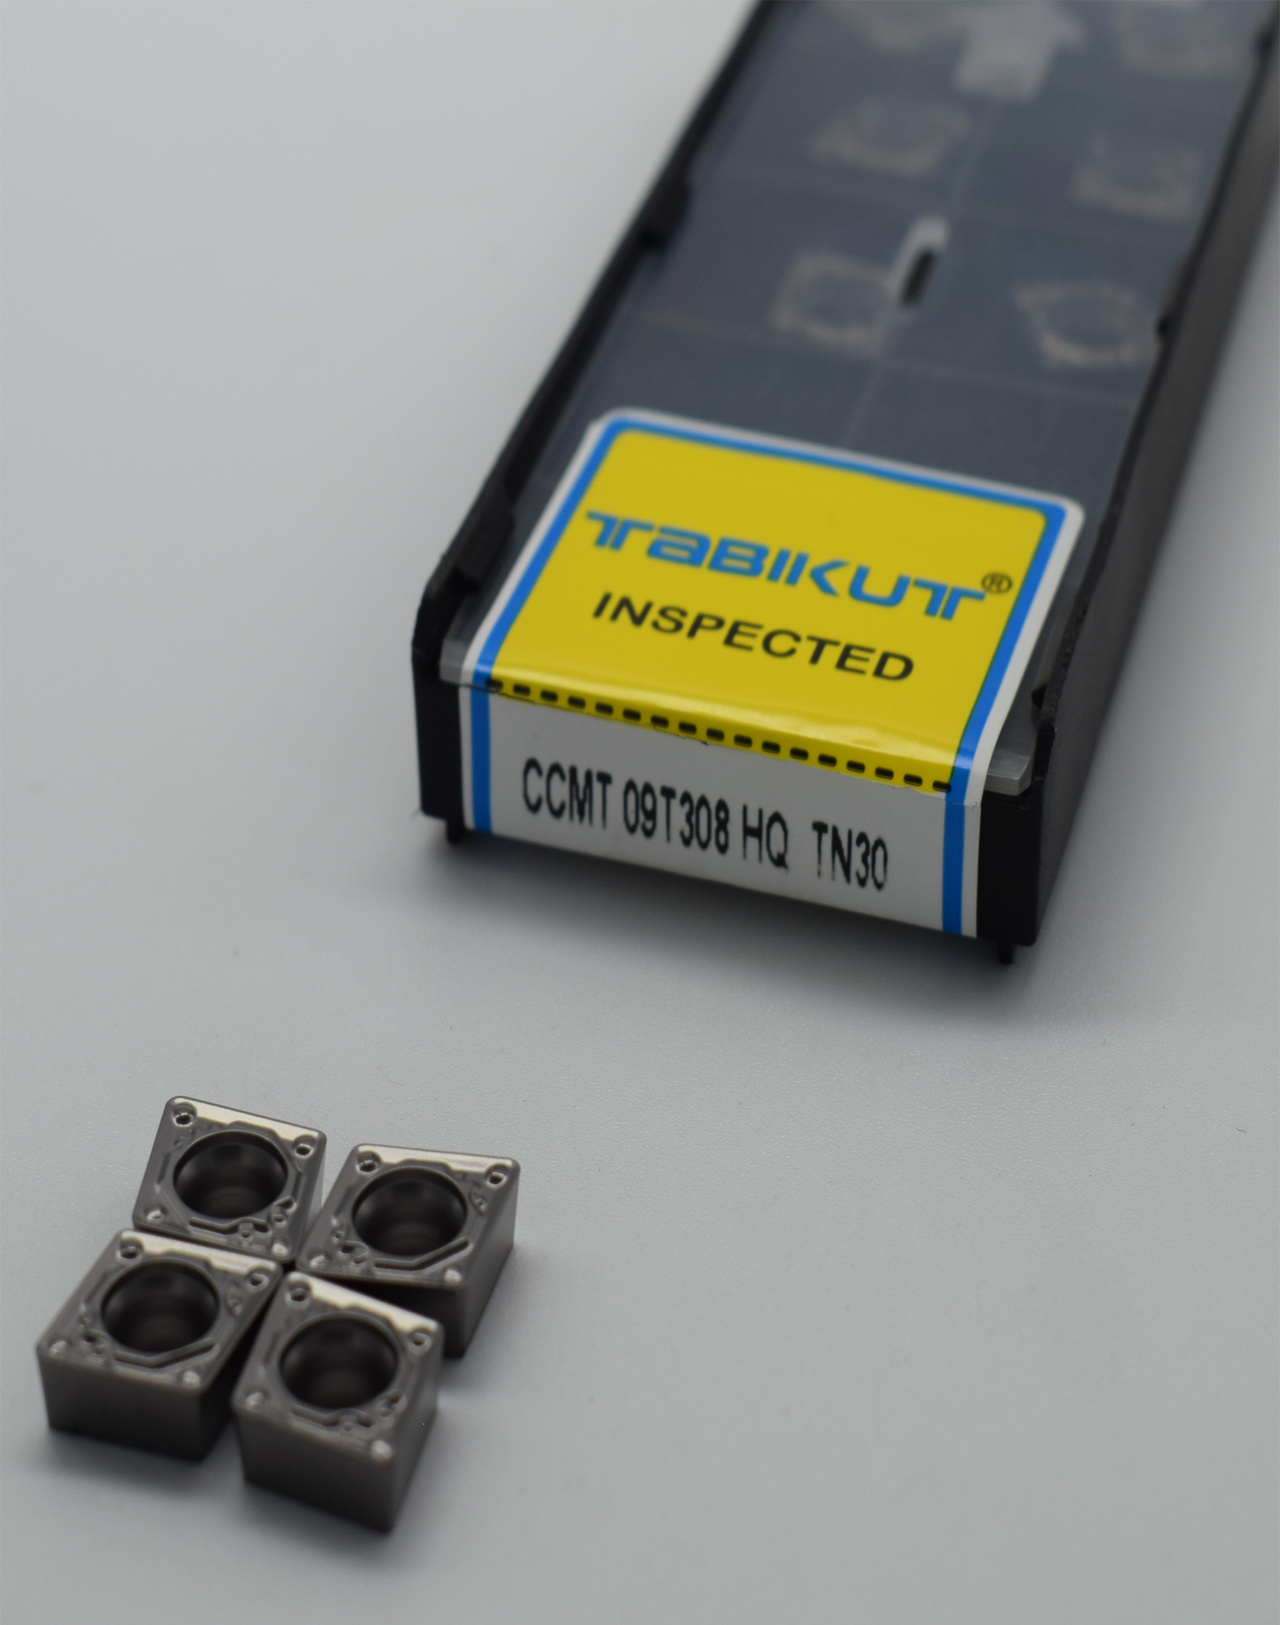 CCMT09T304/08 HQ TN30 cermet carbide insert pack of 10